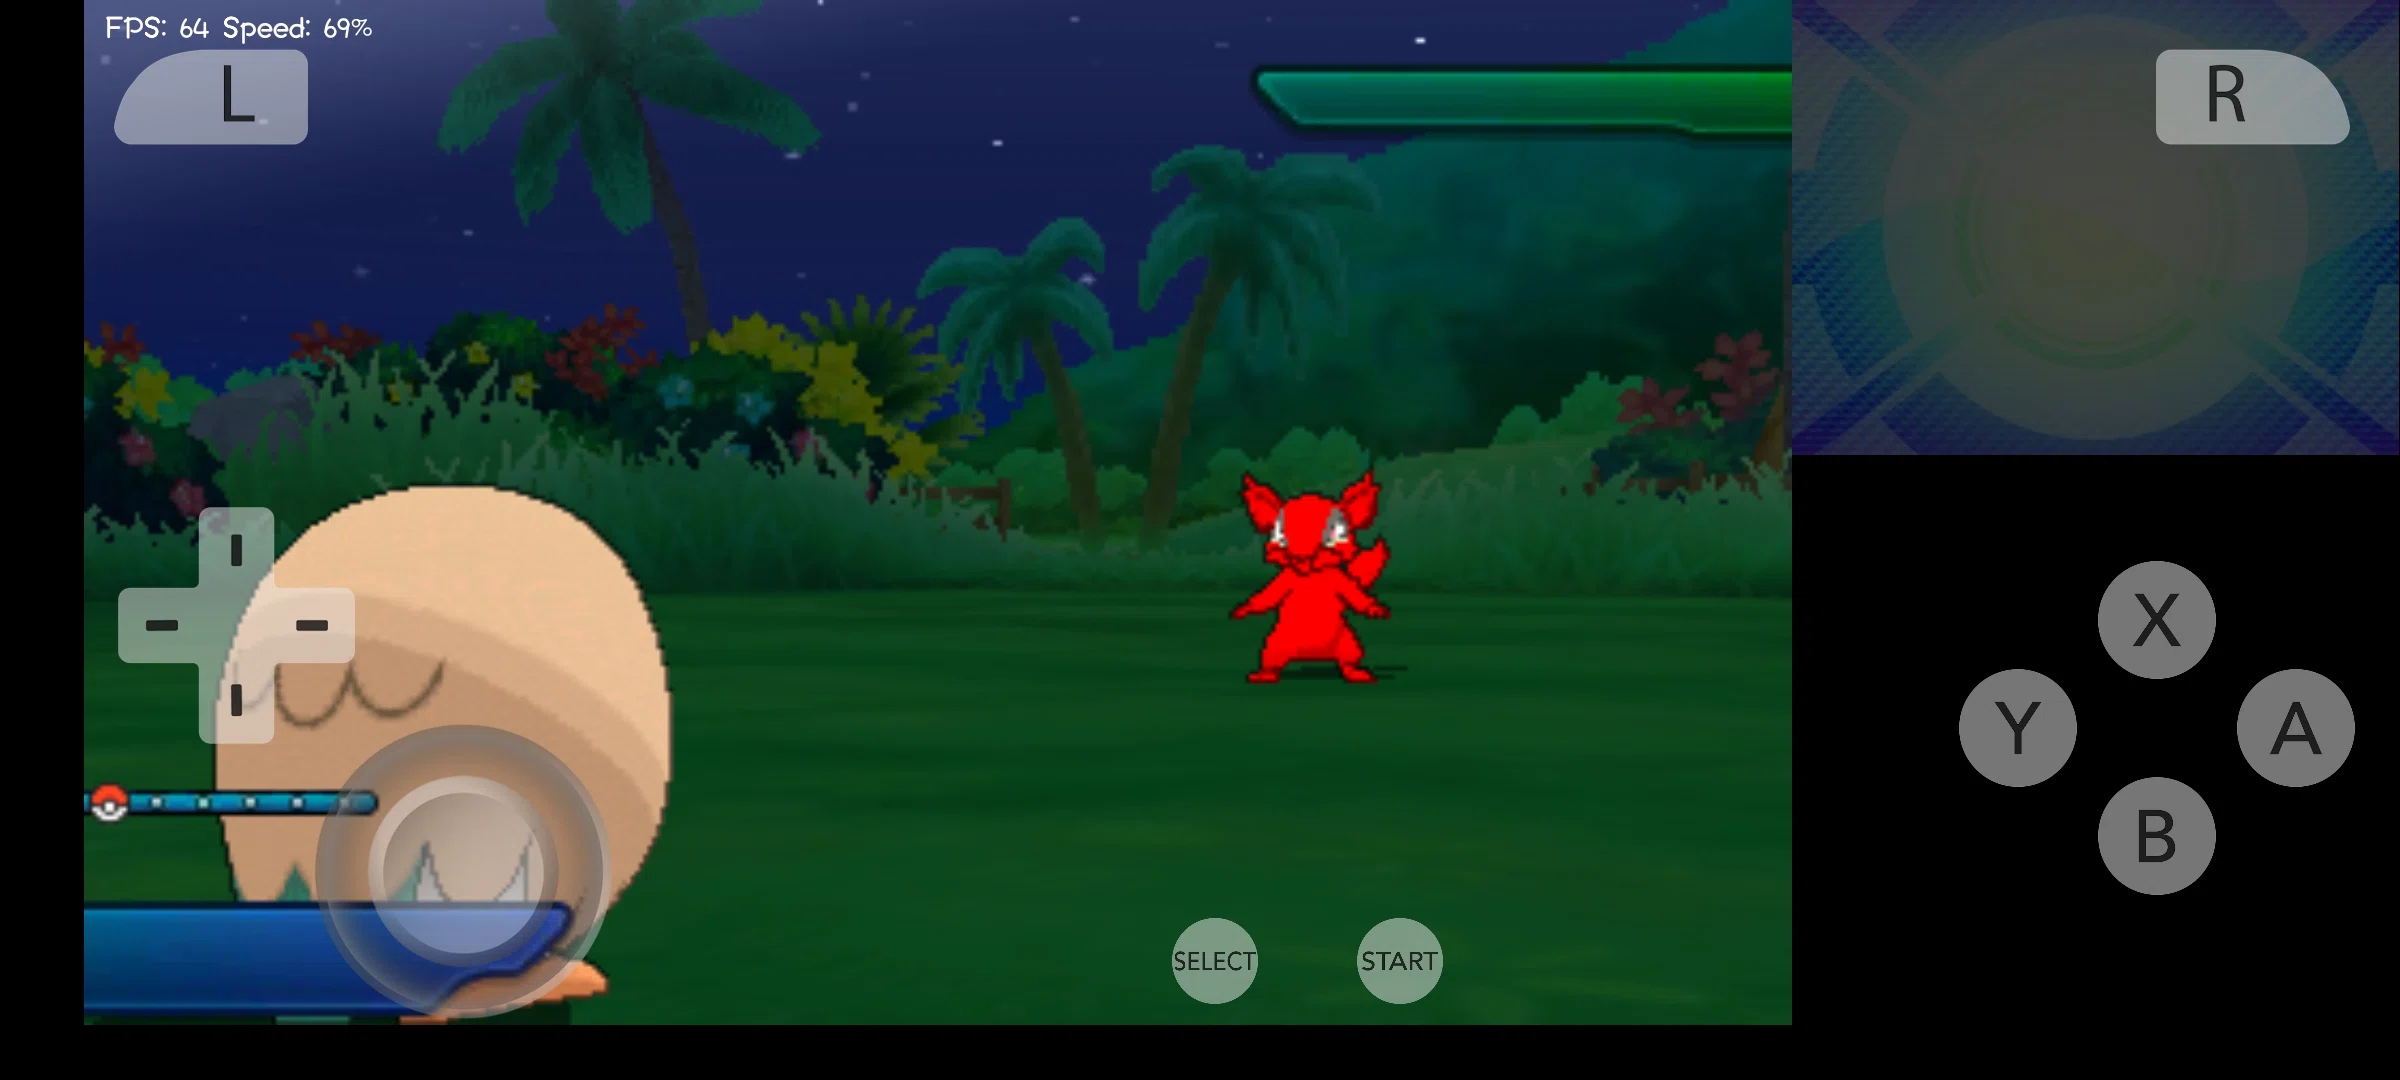 Pokémon Ultra Moon Citra Android Download APK OBB - Citra 3DS Emulator